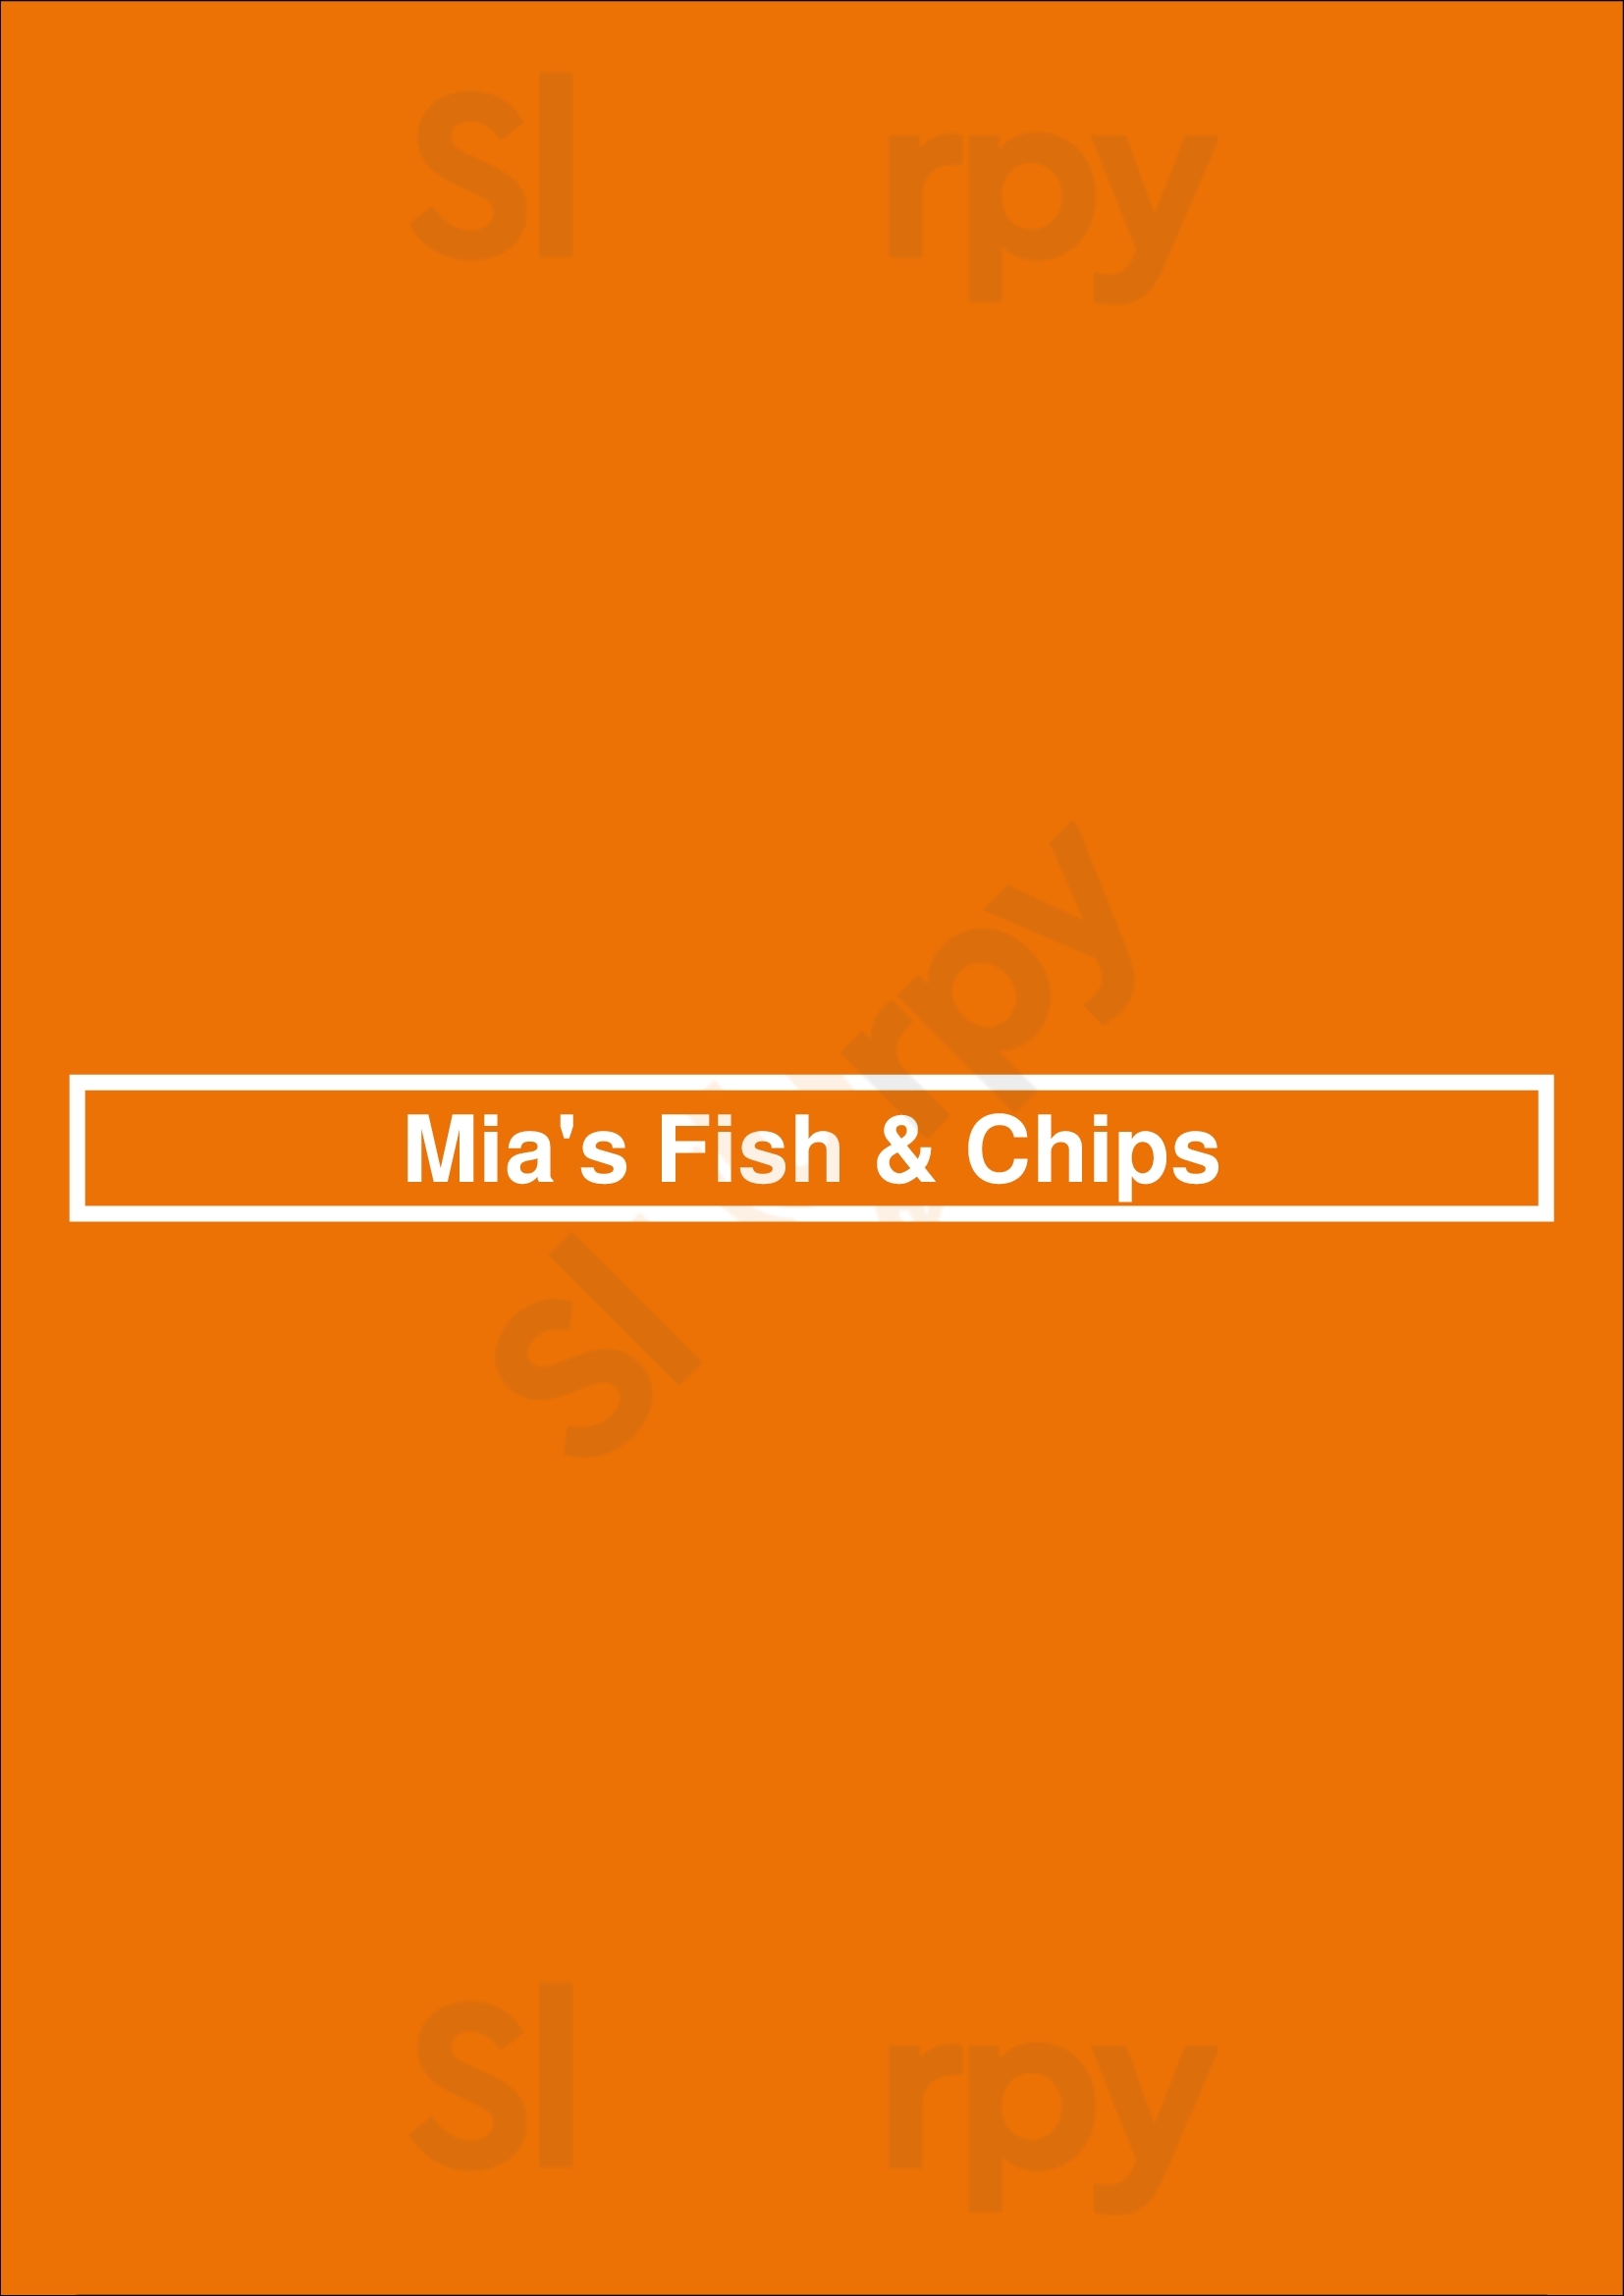 Mia's Fish & Chips Poole Menu - 1